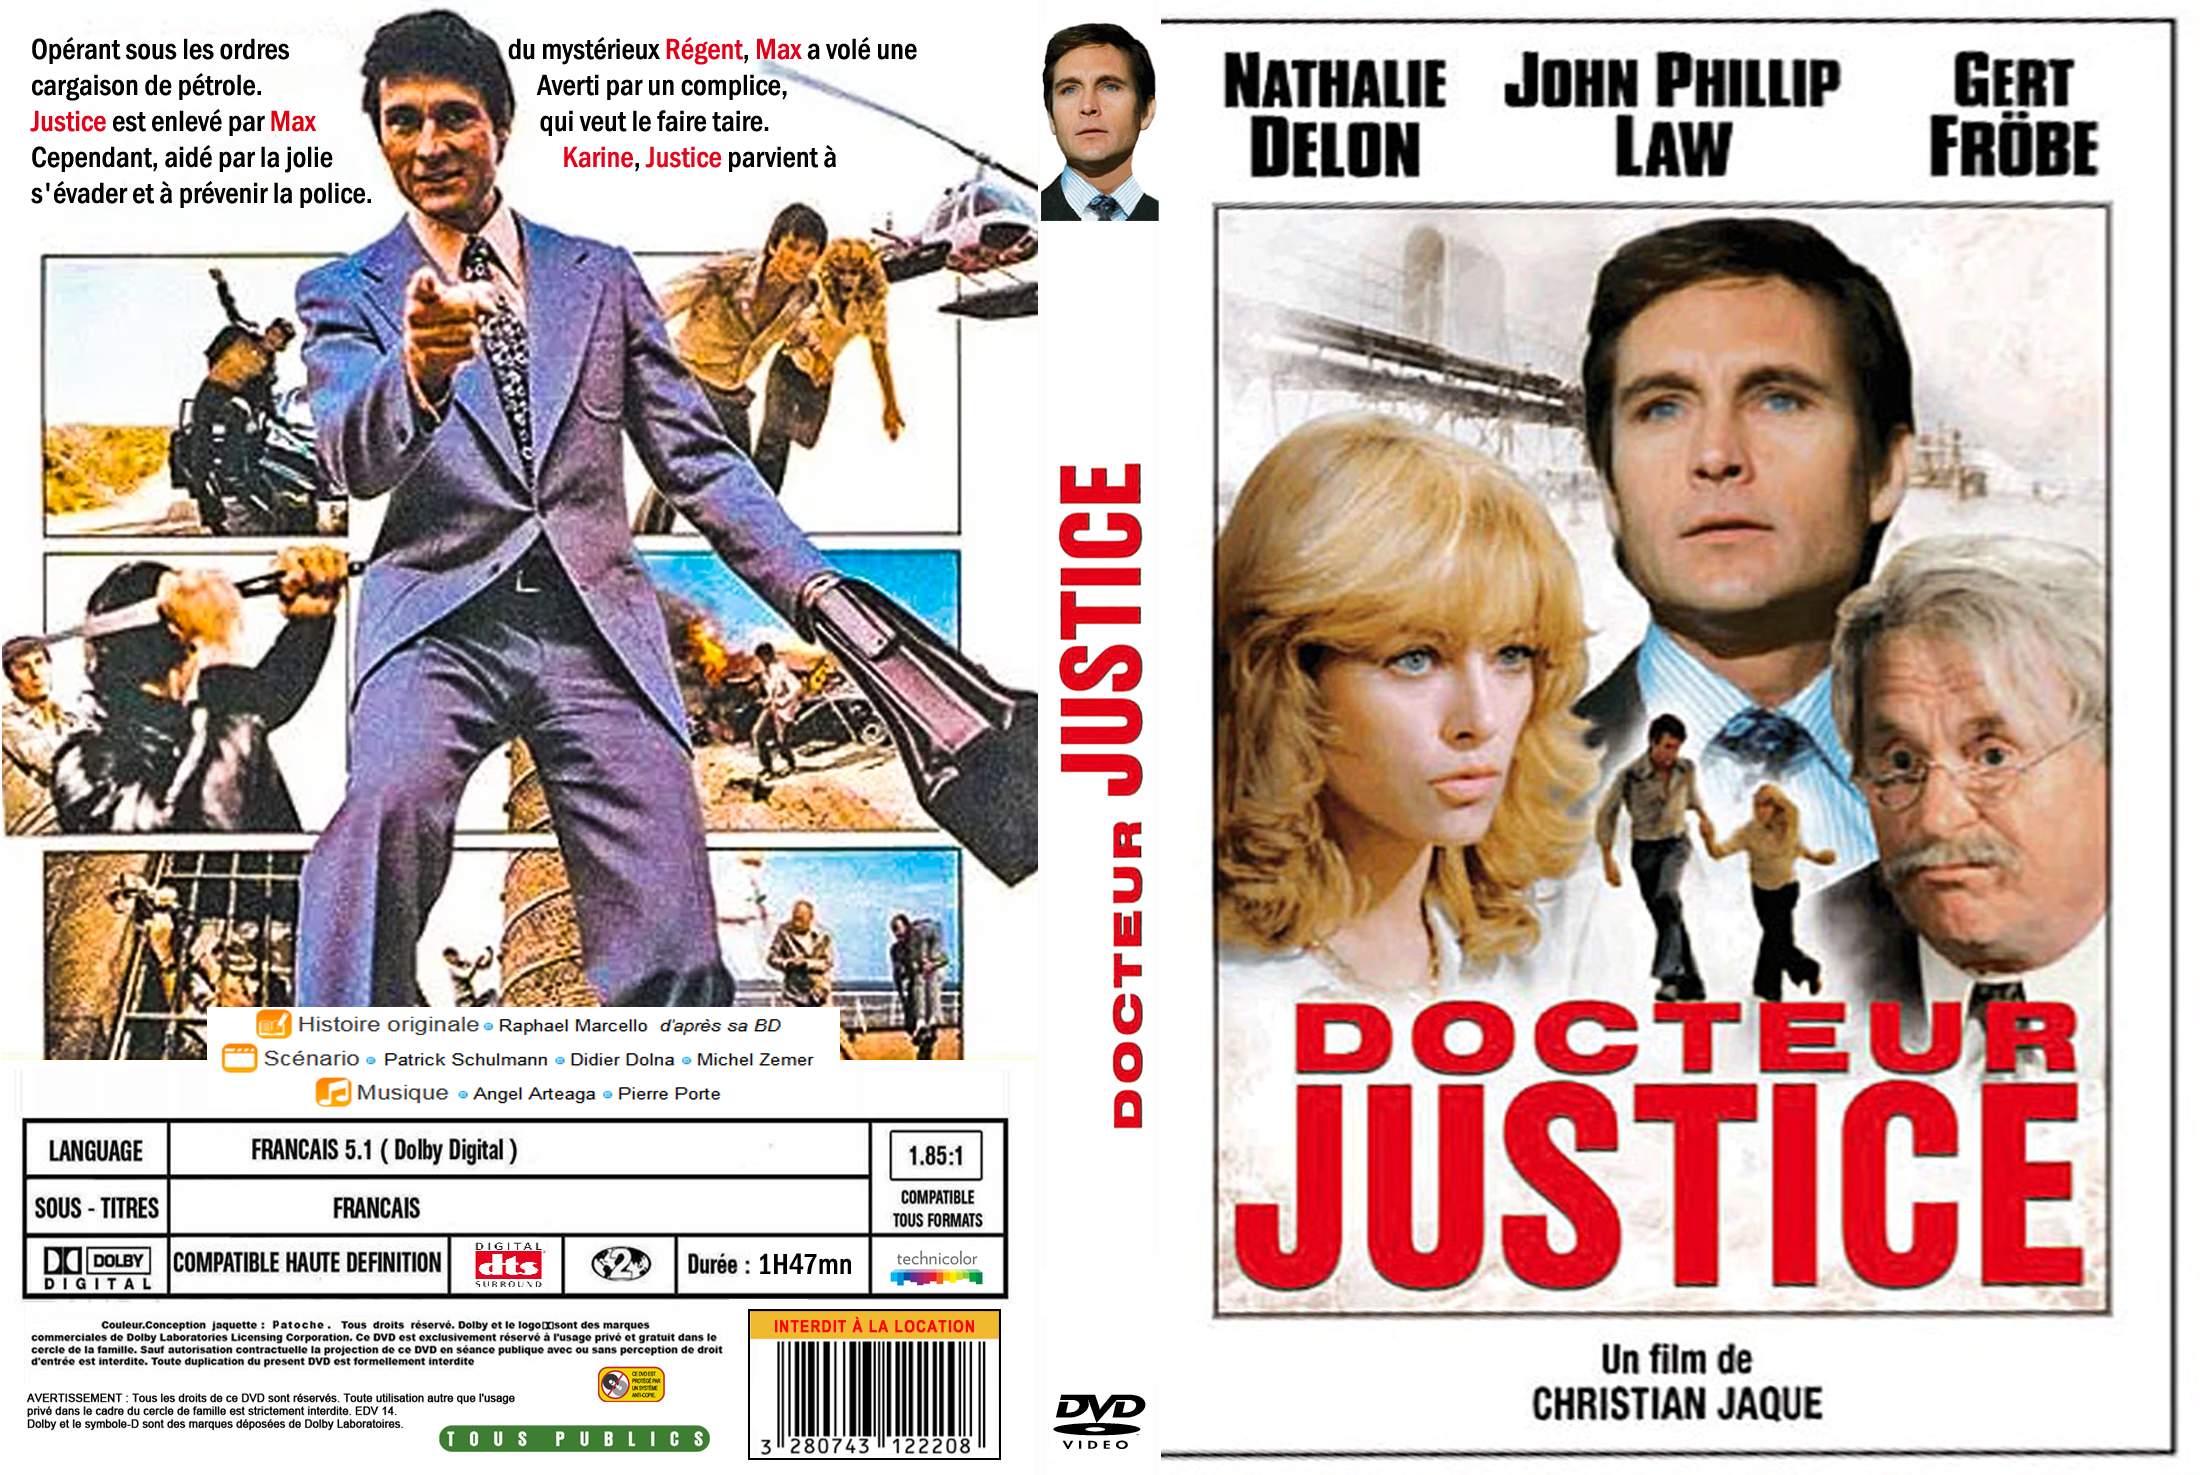 Jaquette DVD Docteur Justice custom